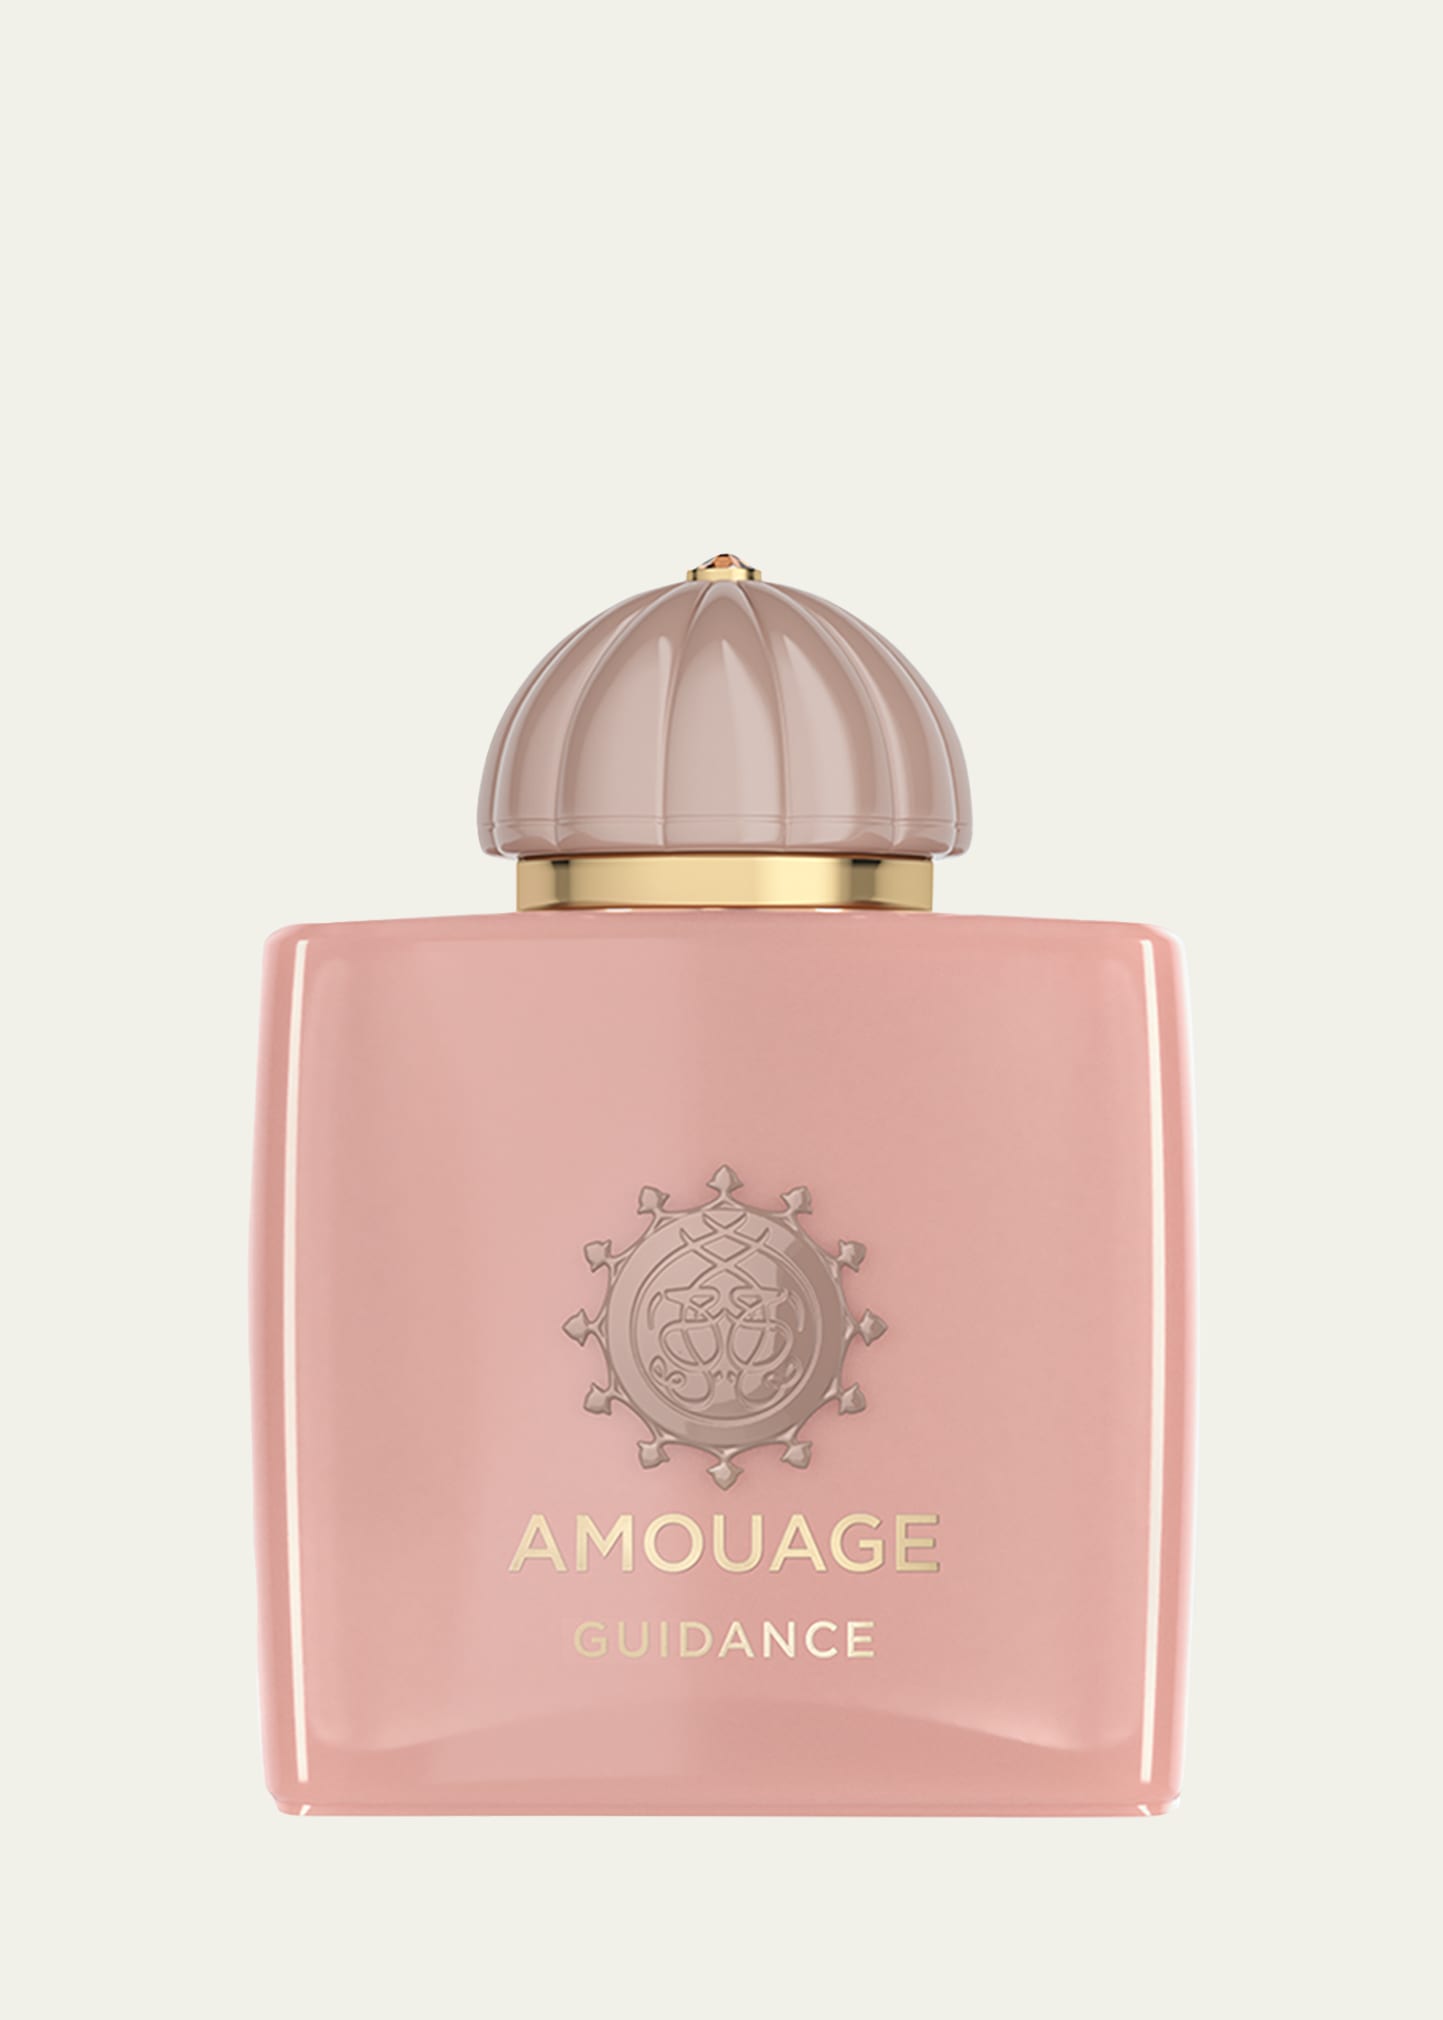 Amouage Guidance Eau de Parfum, 3.4 oz. | Bergdorf Goodman